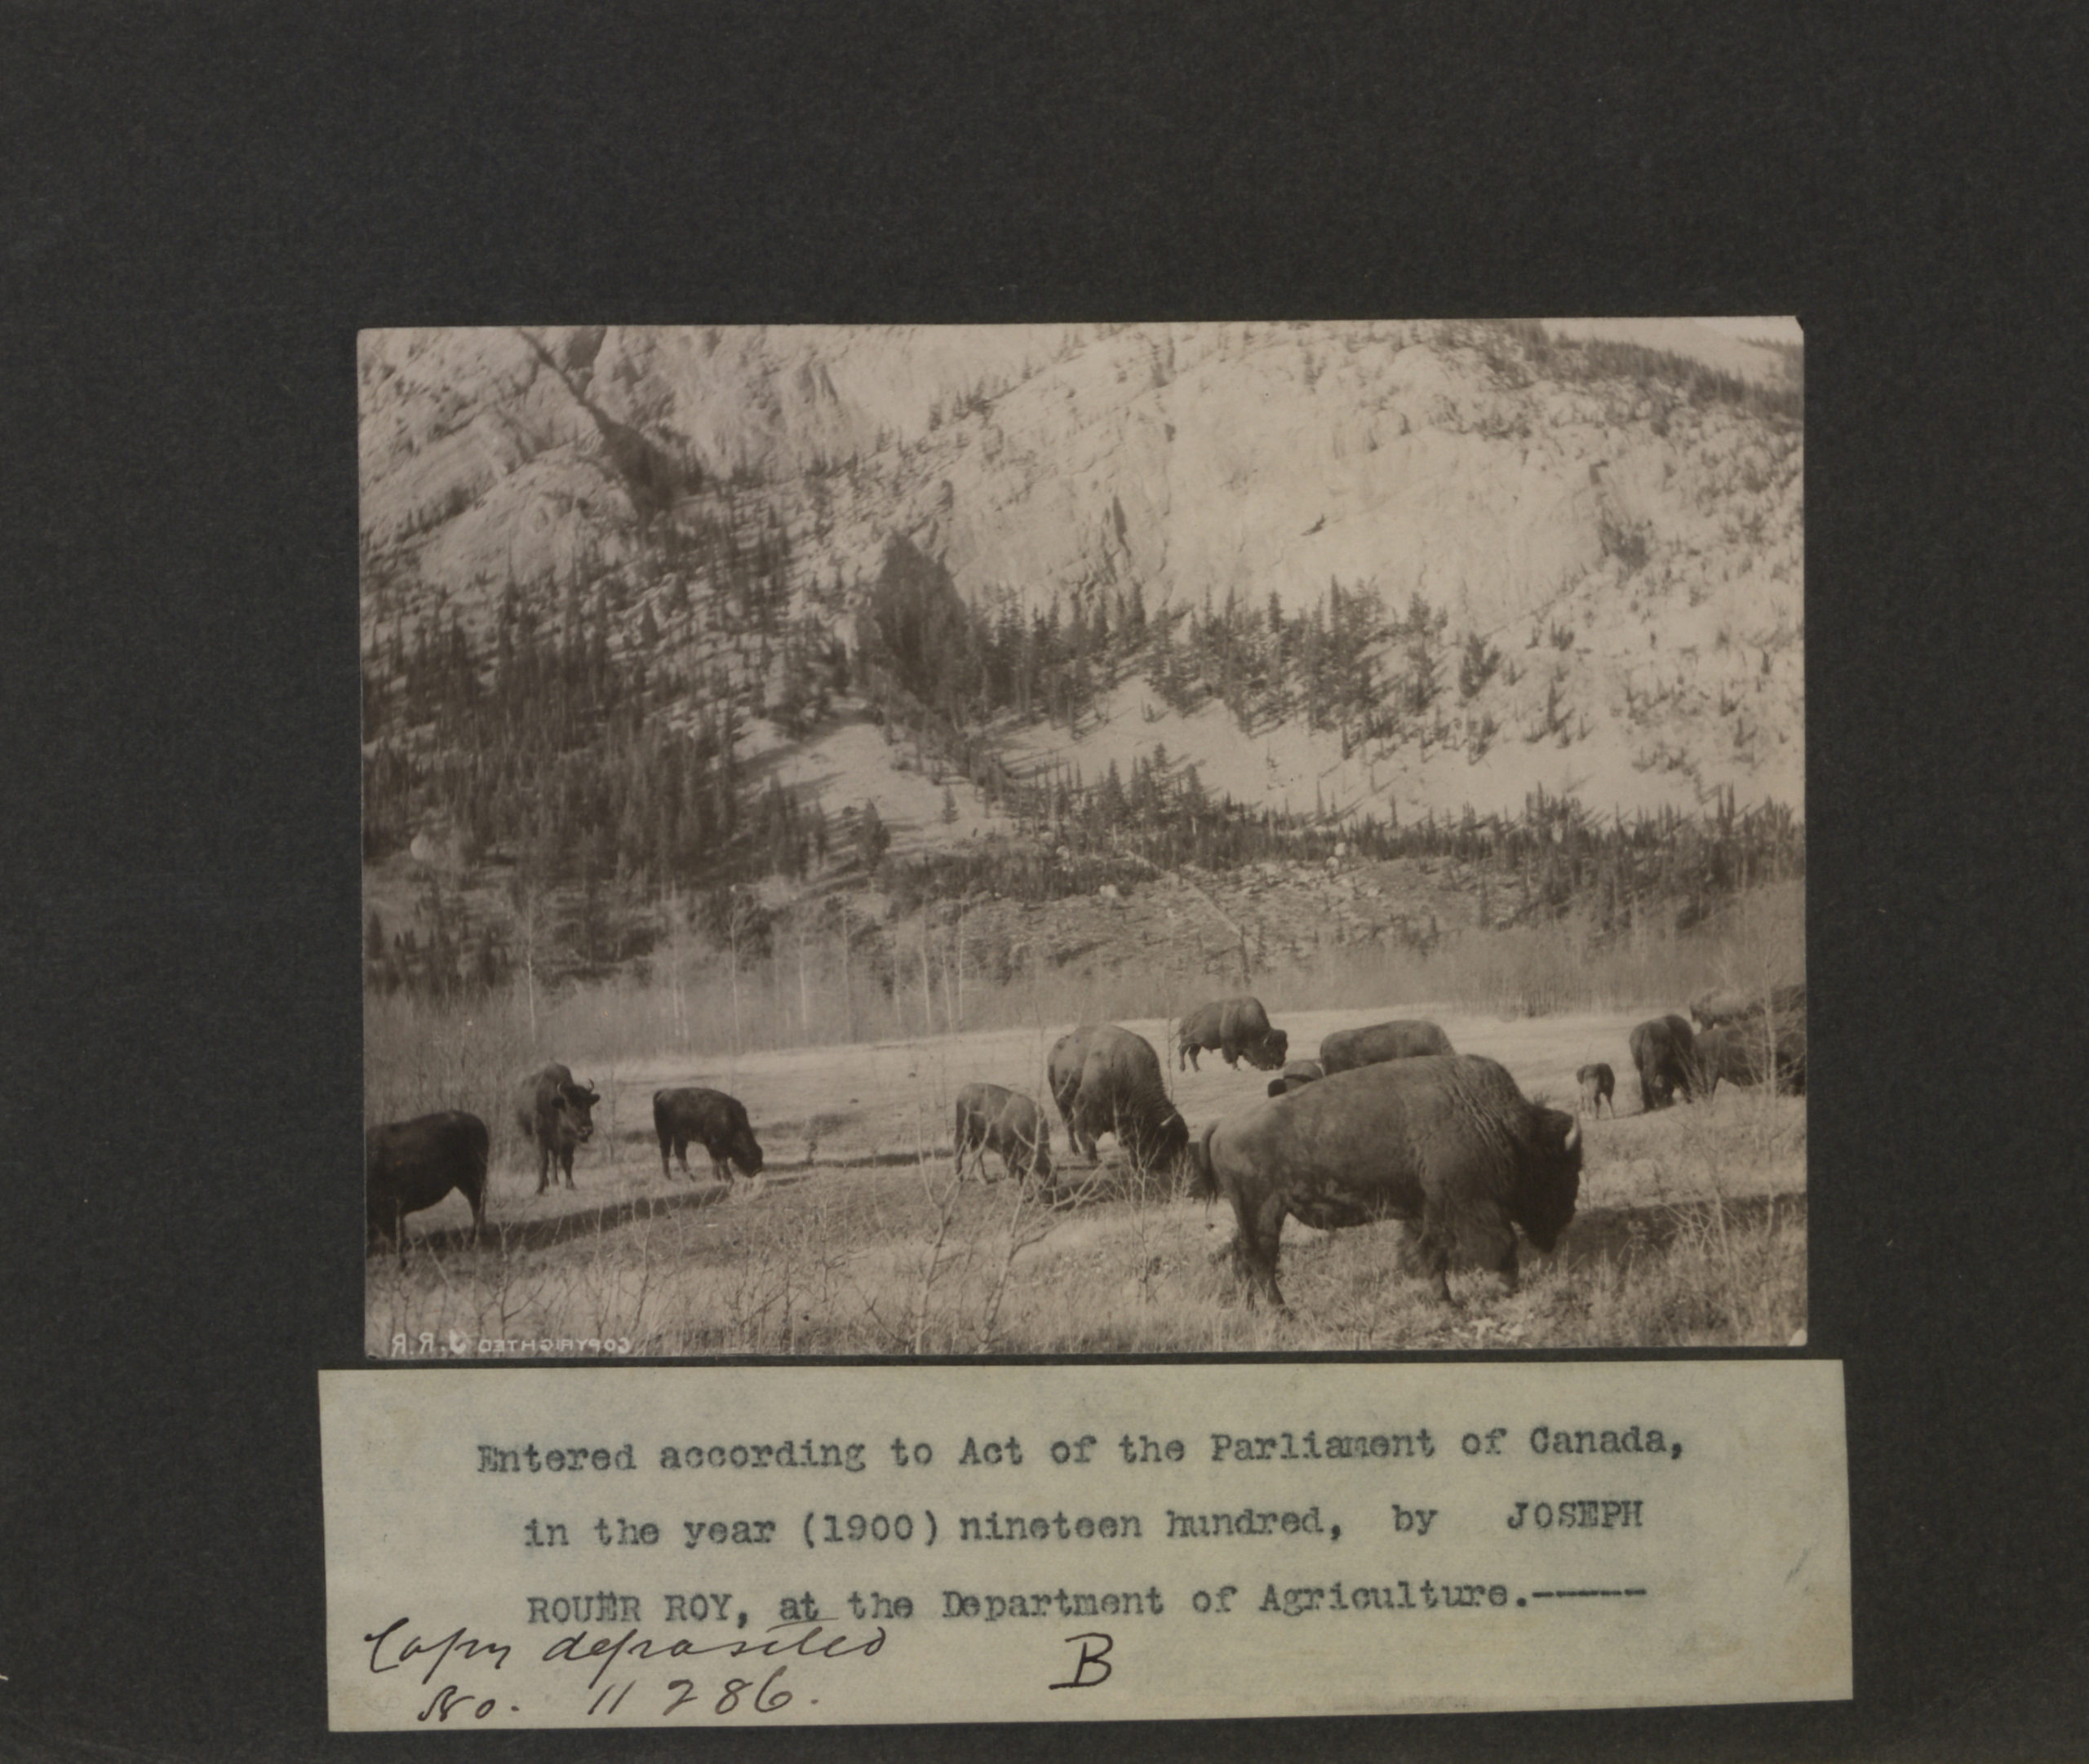 Buffalo herd at the foot of a mountain. Long description available.